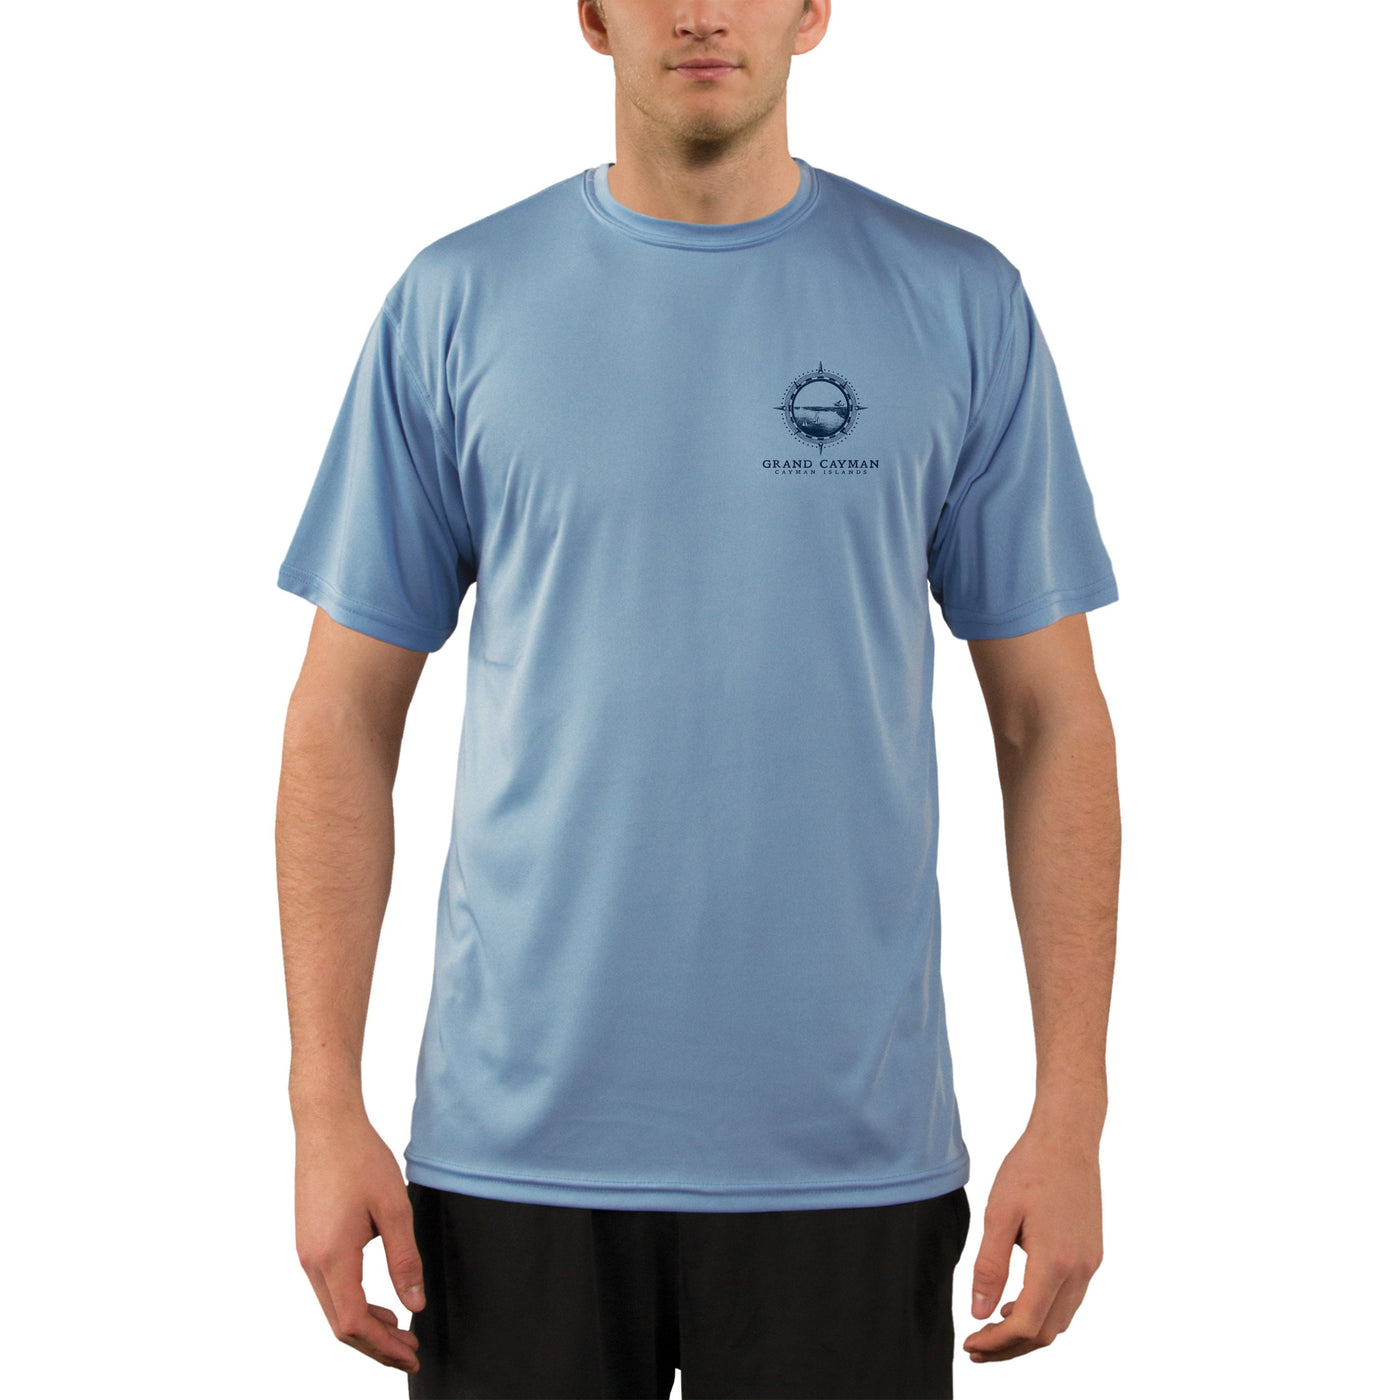 Compass Vintage Grand Cayman Men's UPF 50+ Short Sleeve T-shirt